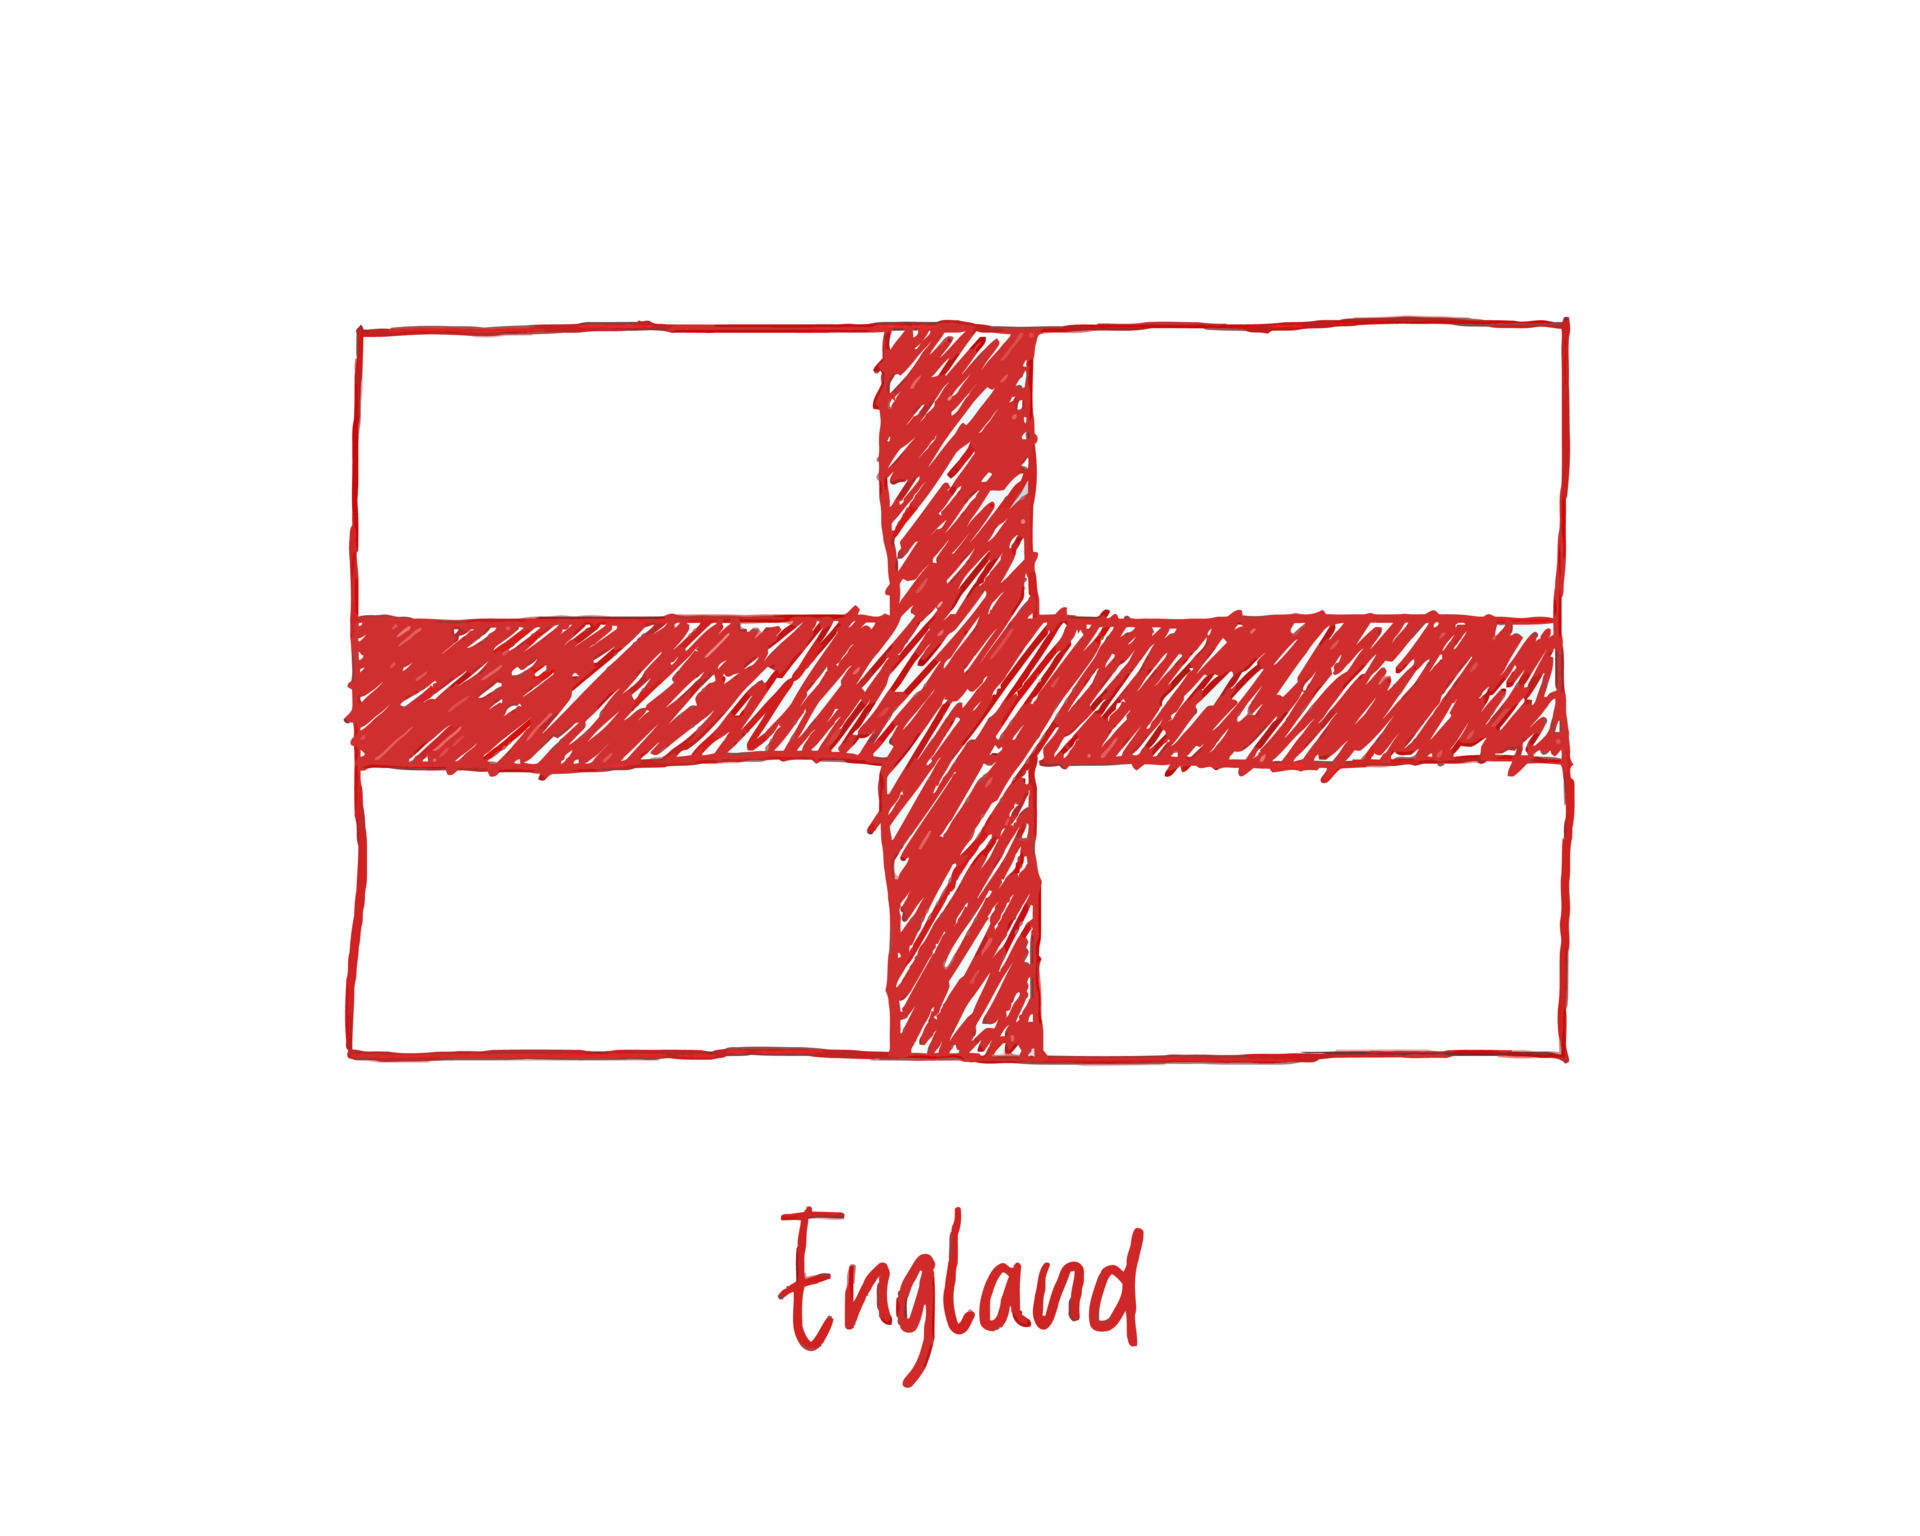 Emblazoned Pride - Artistic Representation Of The England Flag